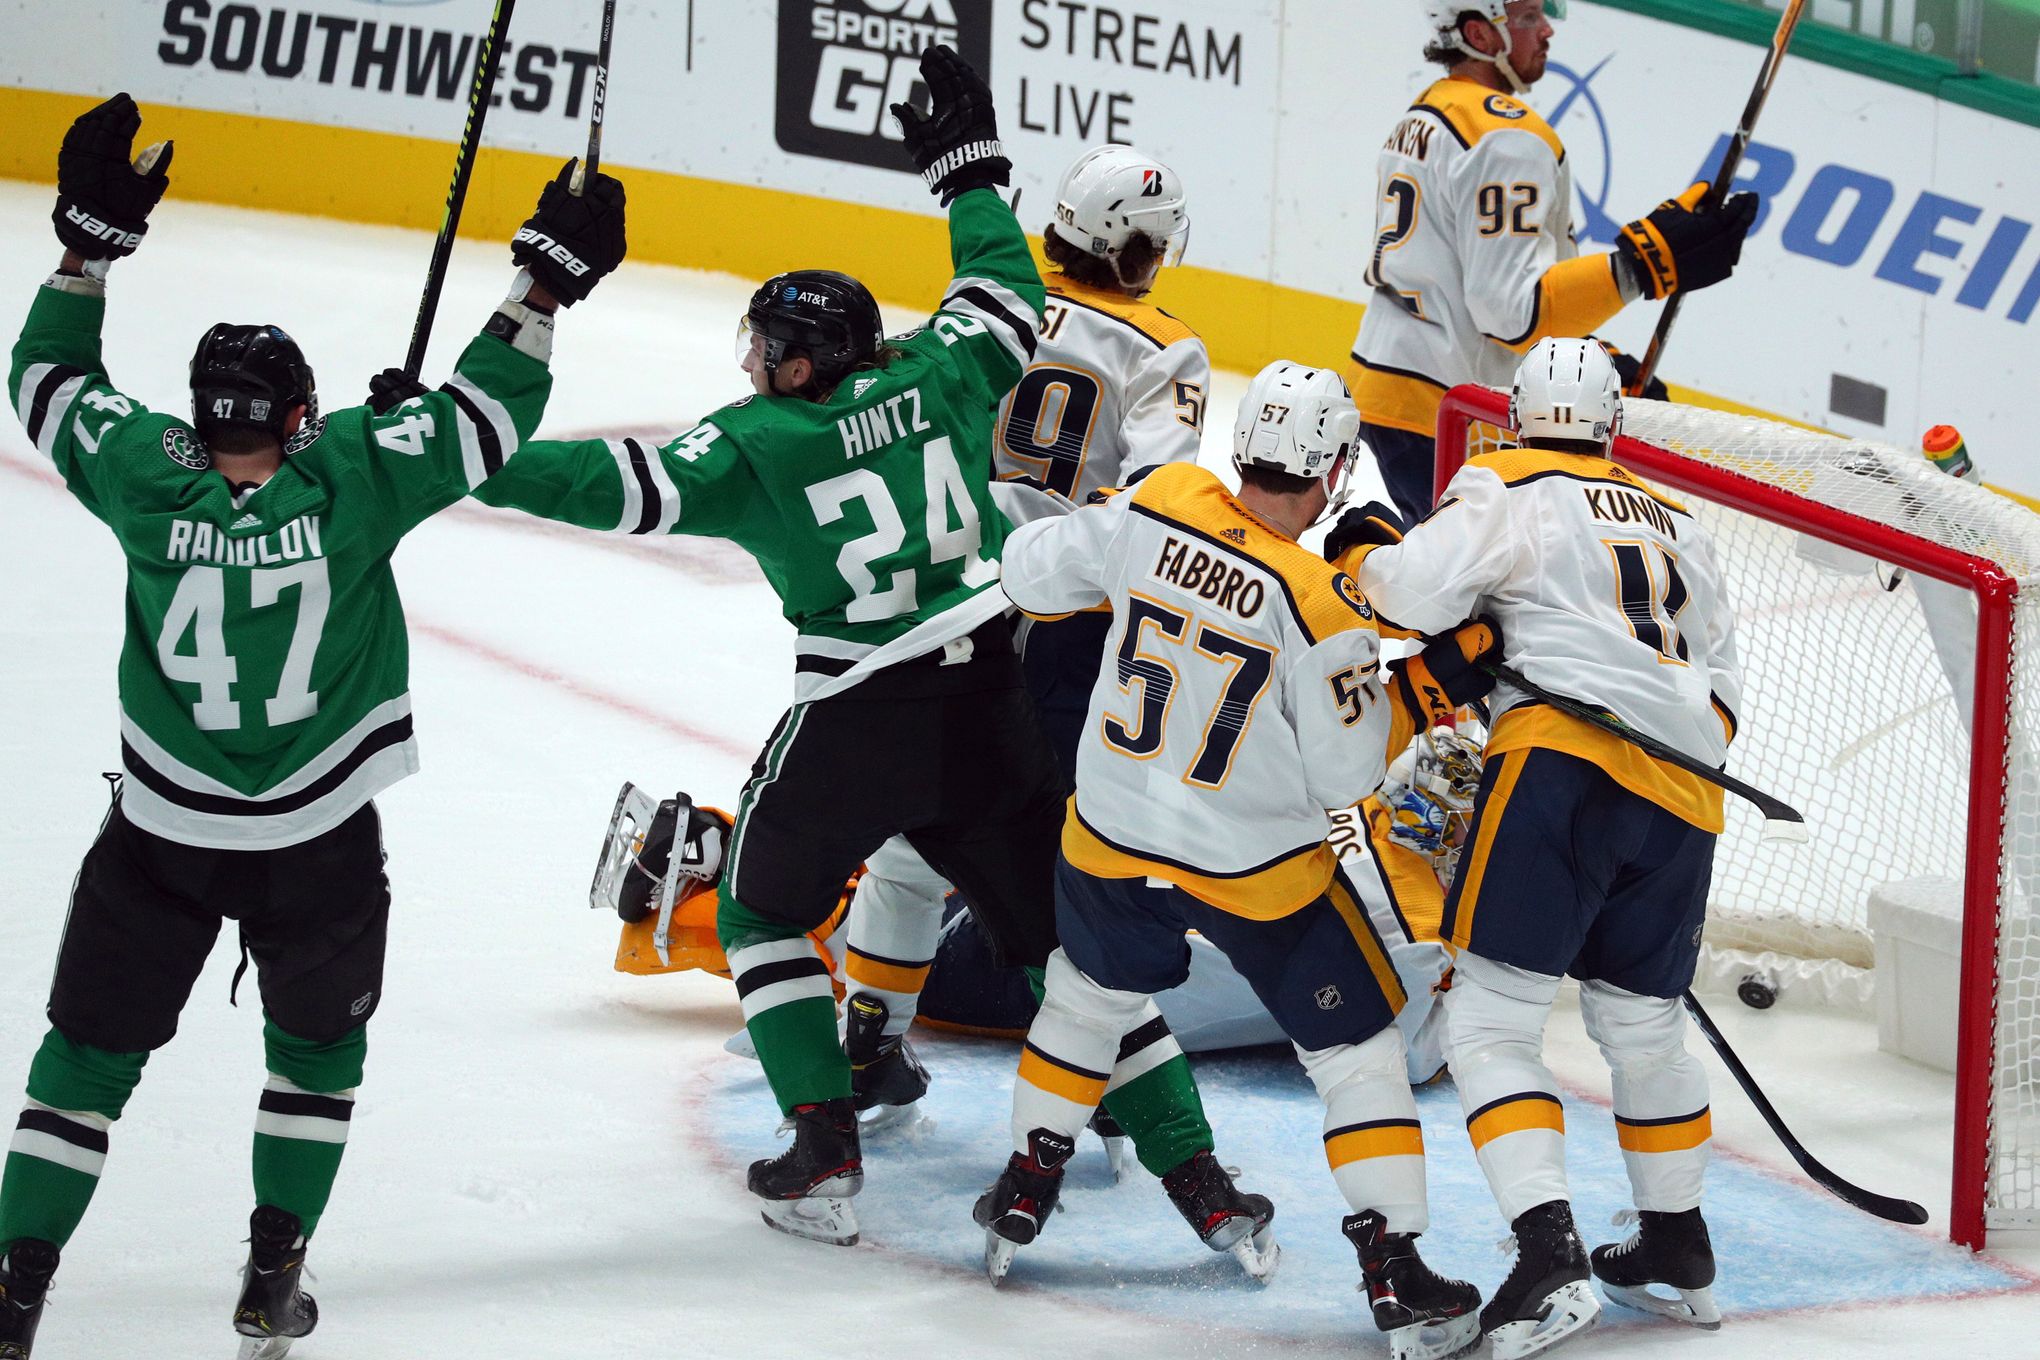 Stars win 3-2 to end Penguins' 10-game win streak